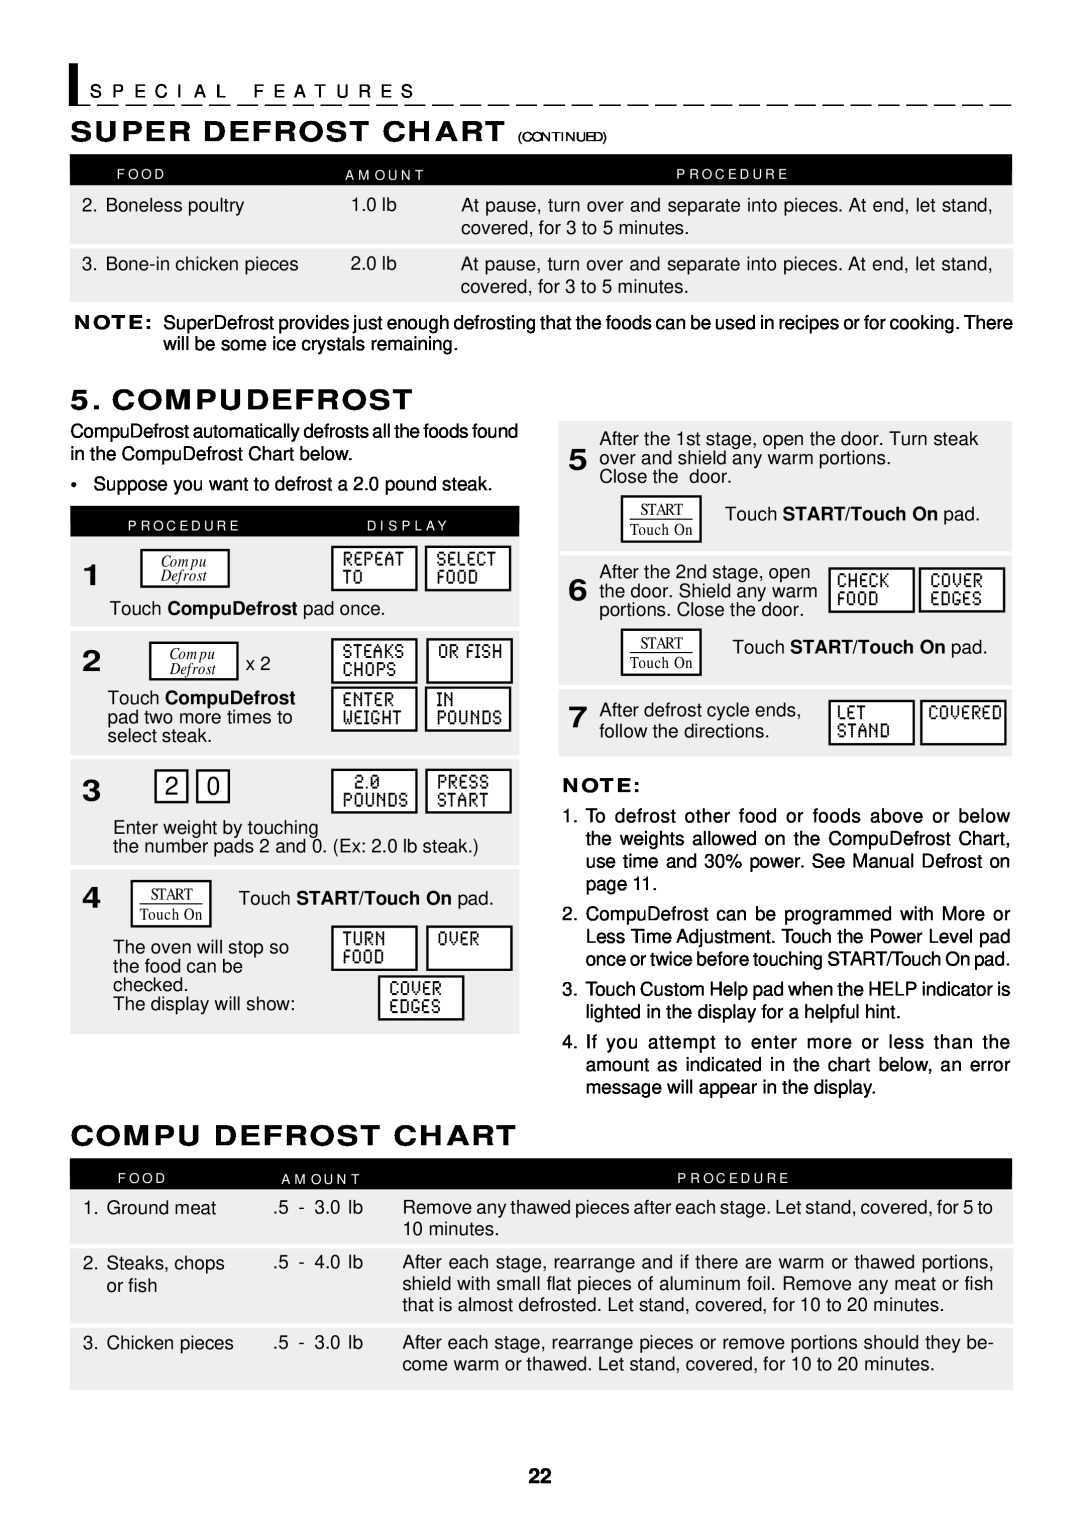 Sharp R-1611 Super Defrost Chart Continued, Compudefrost, Compu Defrost Chart, S P E C I A L F E A T U R E S, F O O D 